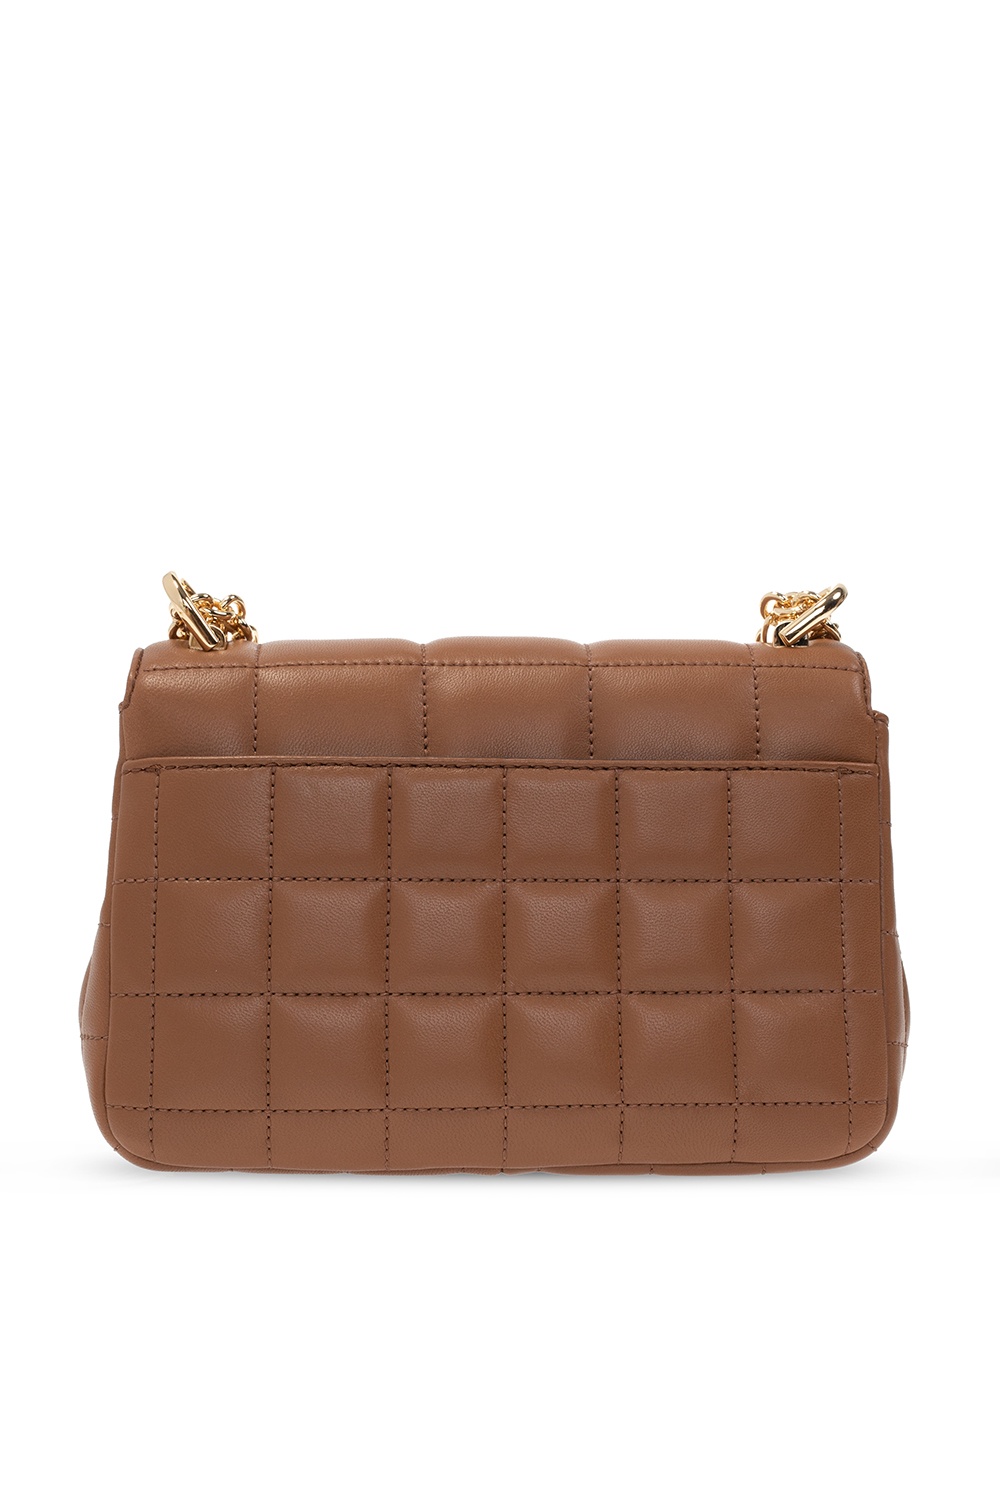 Discover Louis Vuitton Lockme Shopper: Comfortable to carry thanks